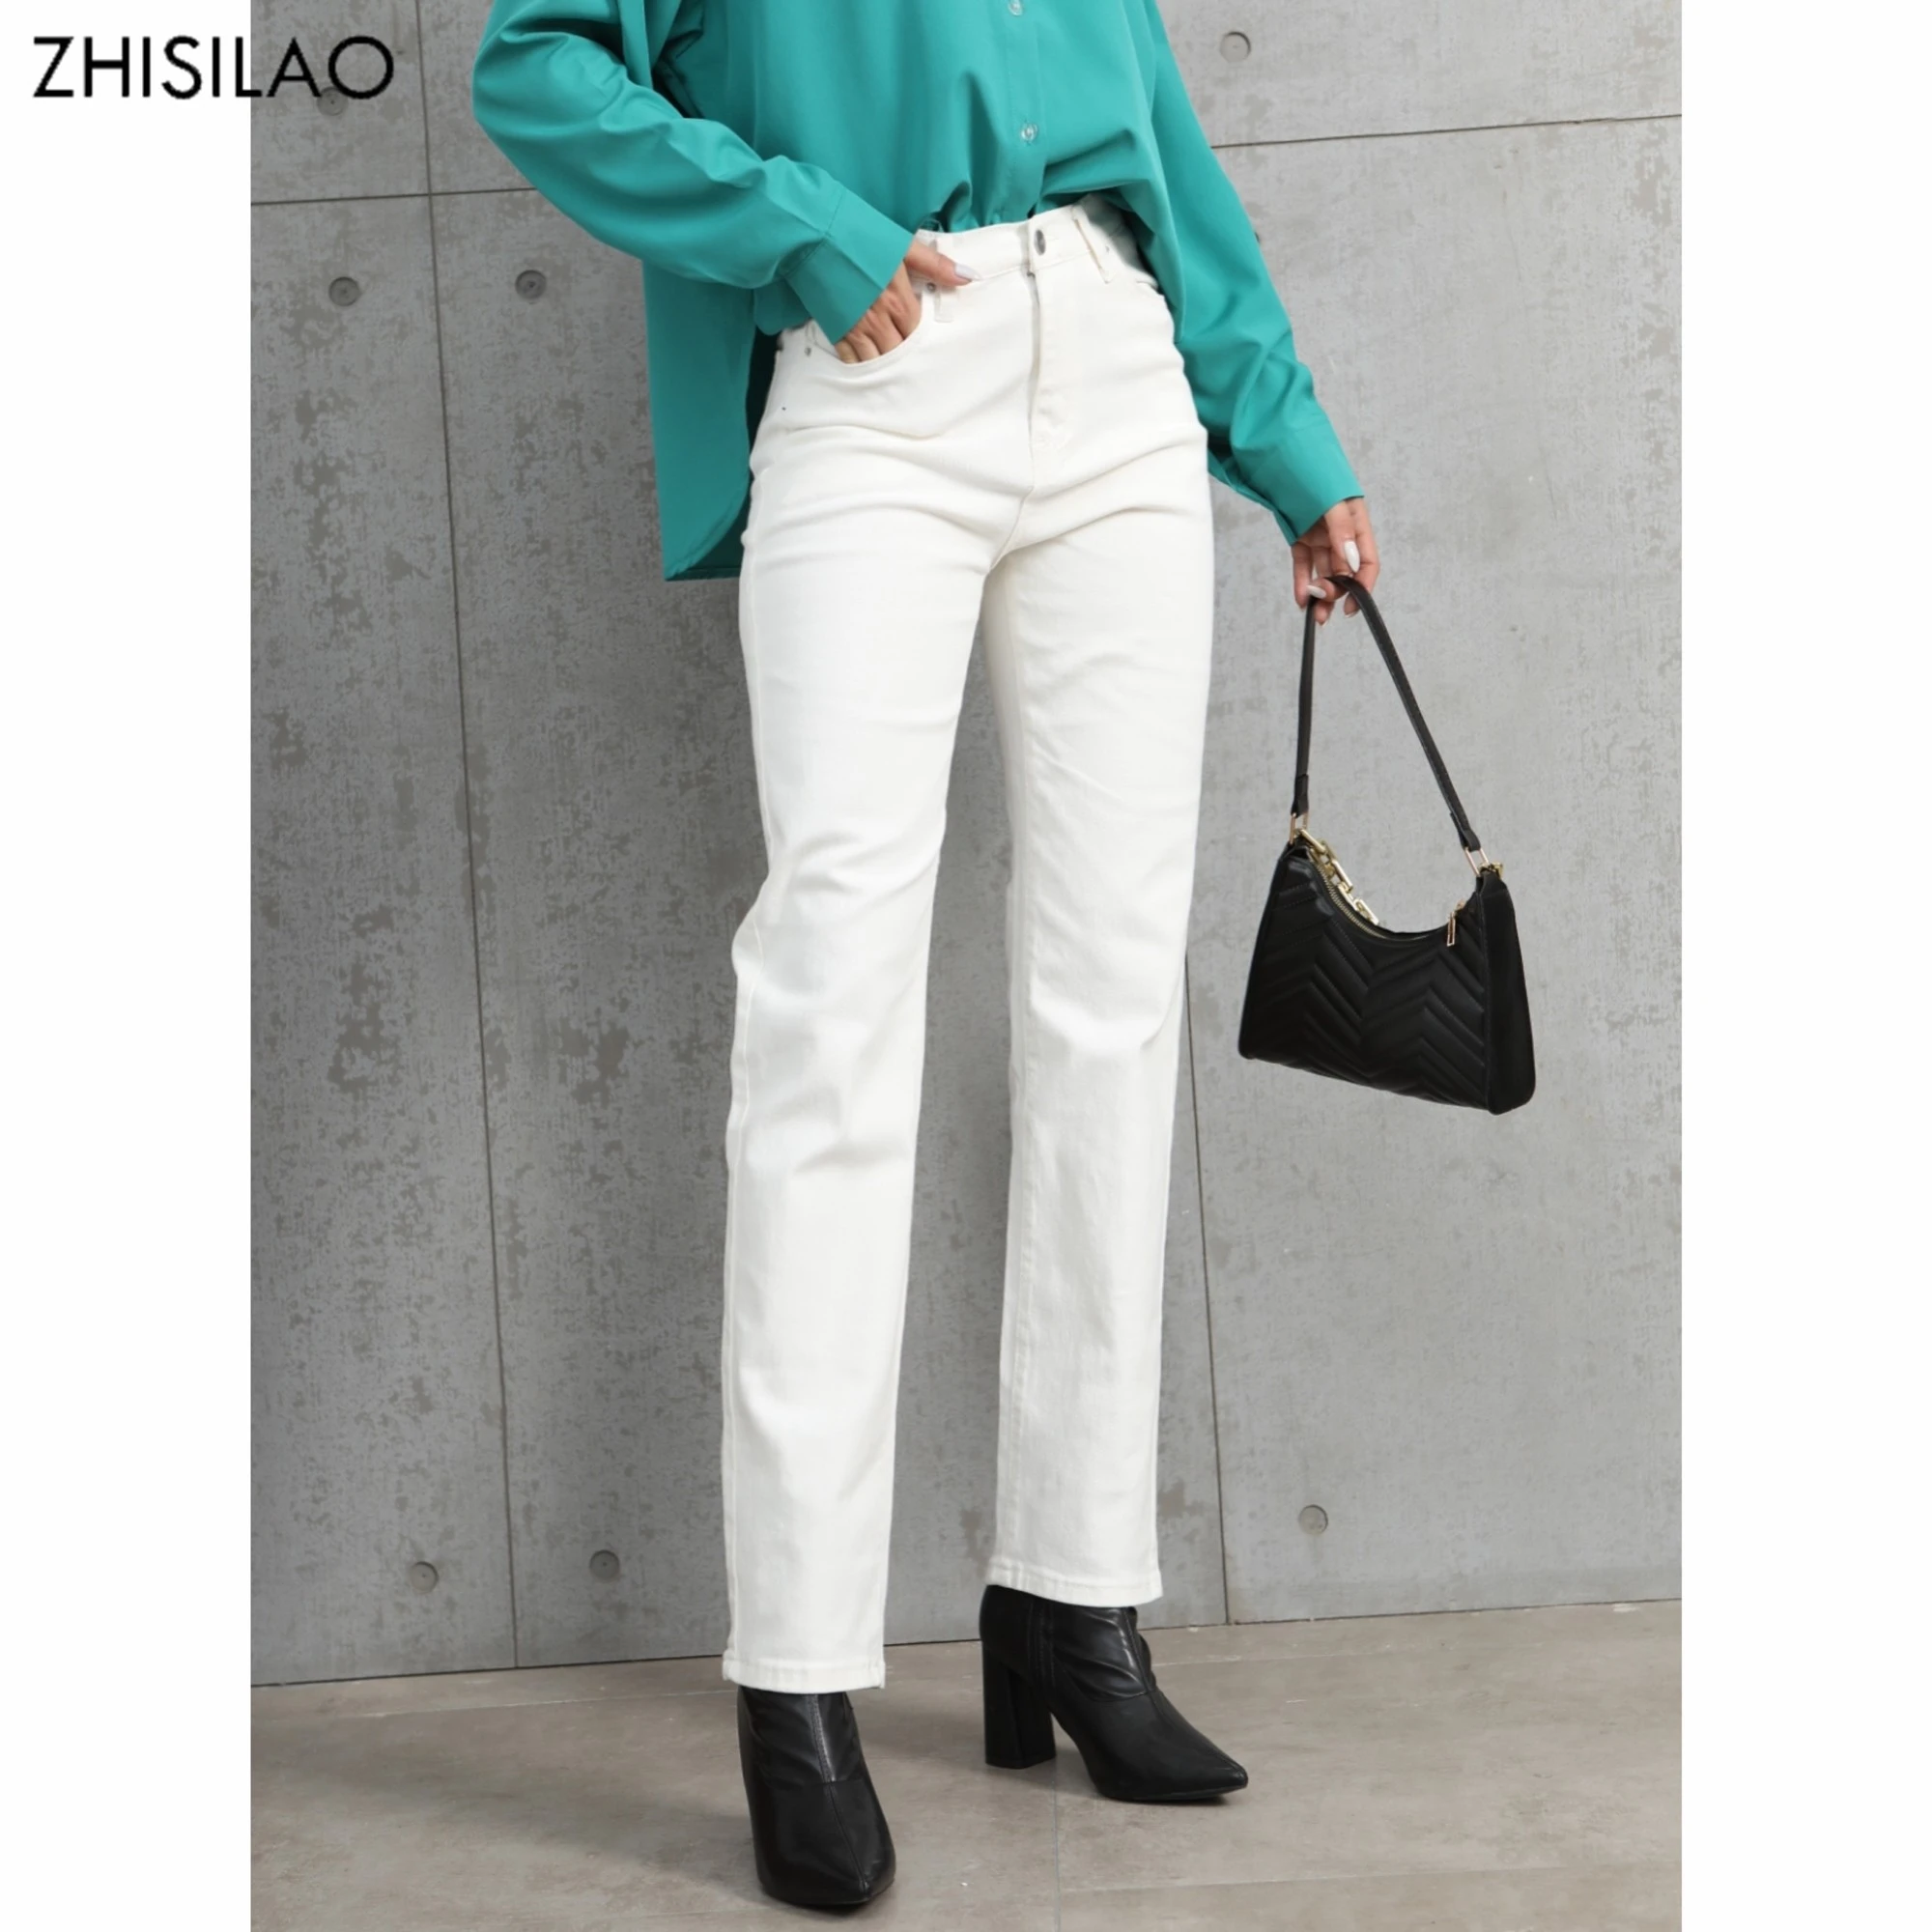 ZHISILAO White Jeans Women Vintage Stretch High Waist Straight Wide Leg Denim Pants Plus Size Autumn 2021 Jeans Streetwear gap jeans